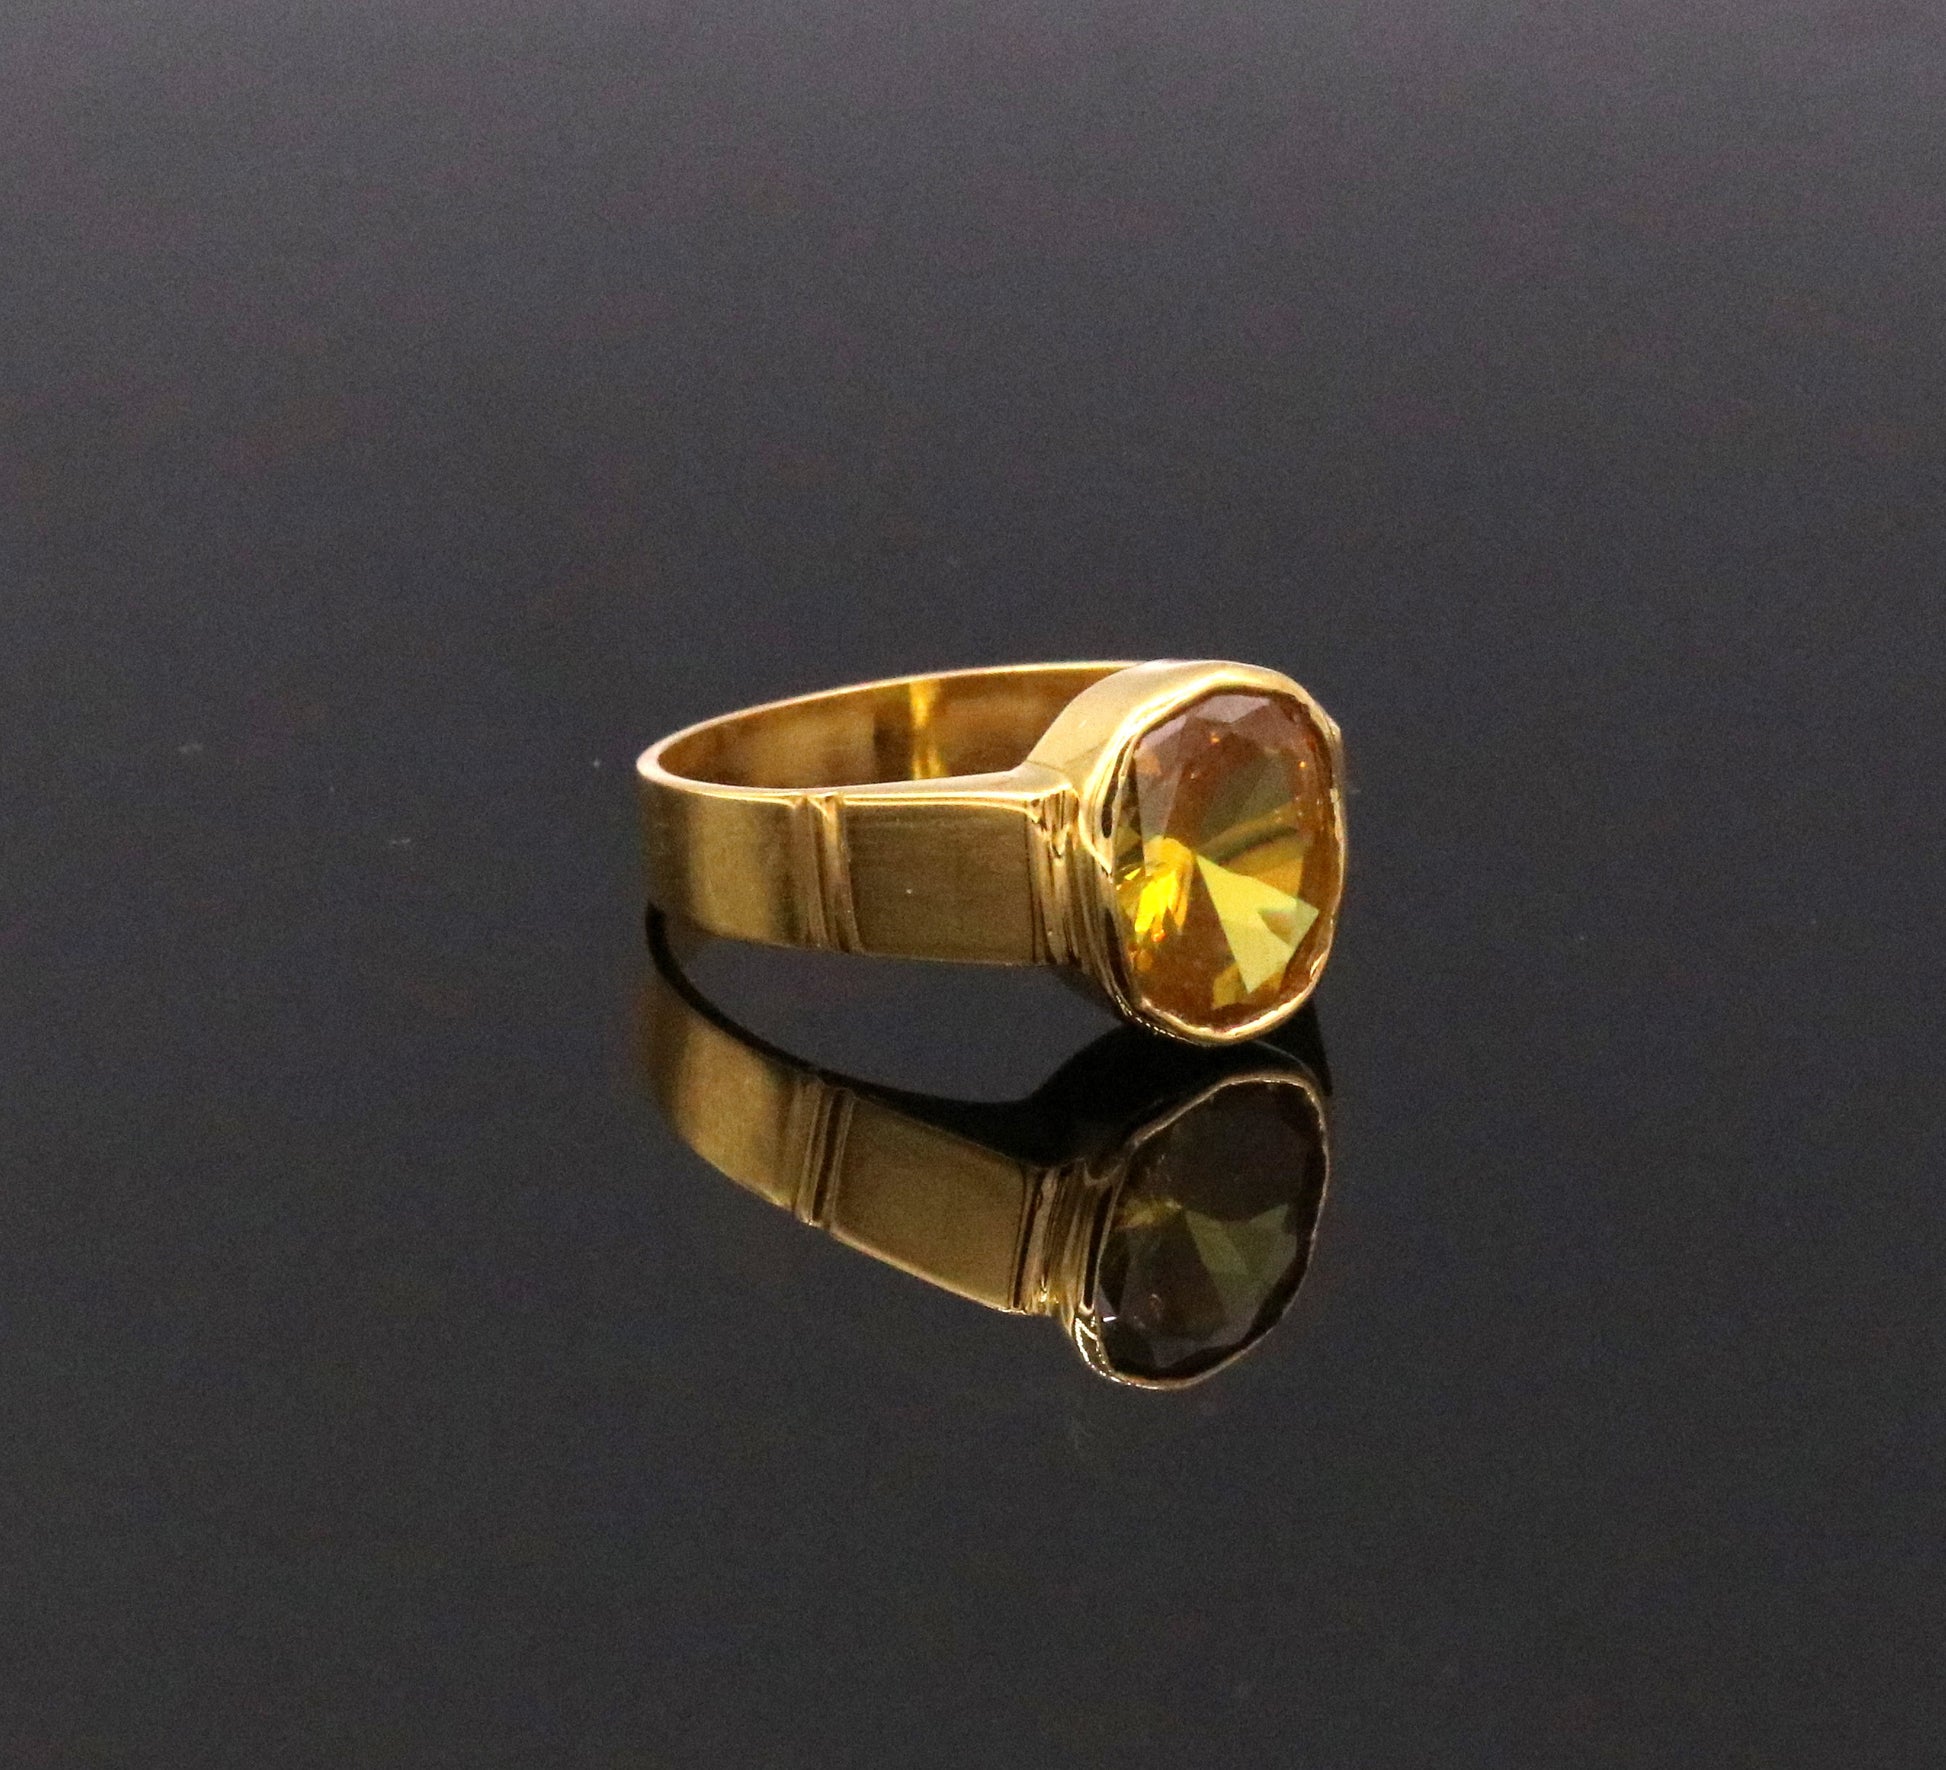 22karat yellow gold handmade ring fabulous band yellow Citrine (sunela in hindi) stone jadau jewelry from rajasthan india ring10 - TRIBAL ORNAMENTS